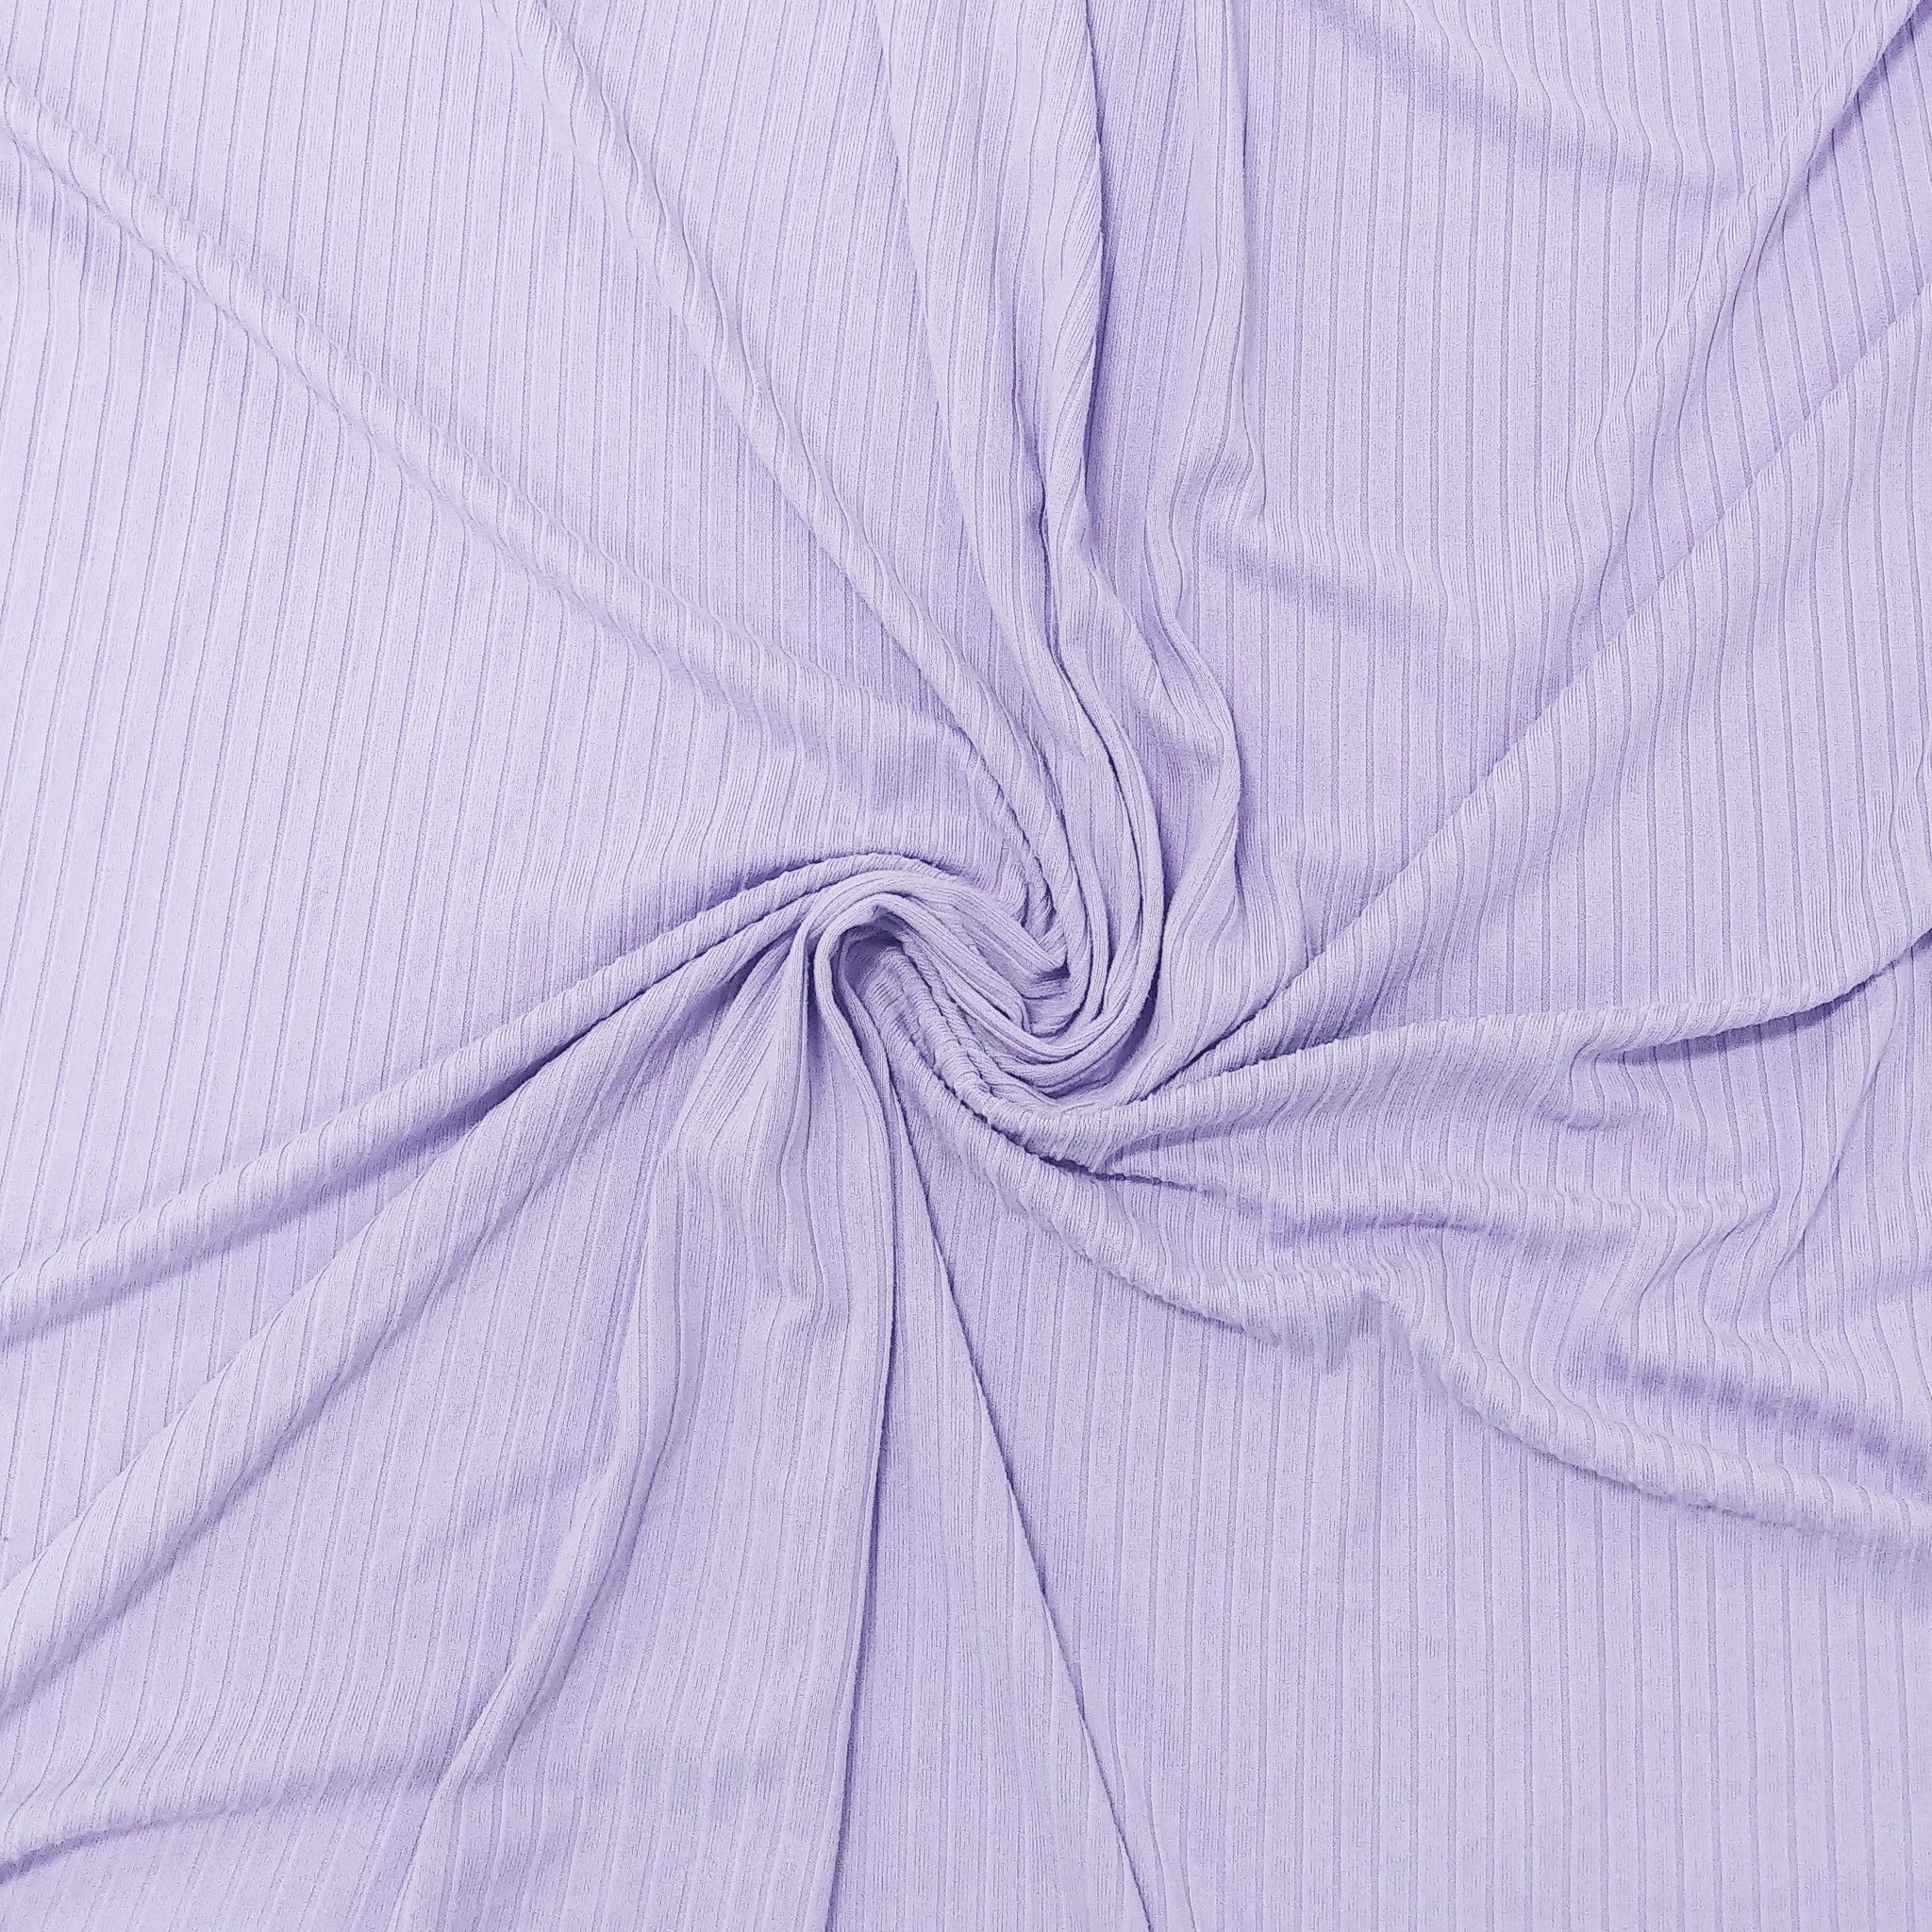 Solid Dusty Purple Rayon Challis Fabric, Raspberry Creek Fabrics